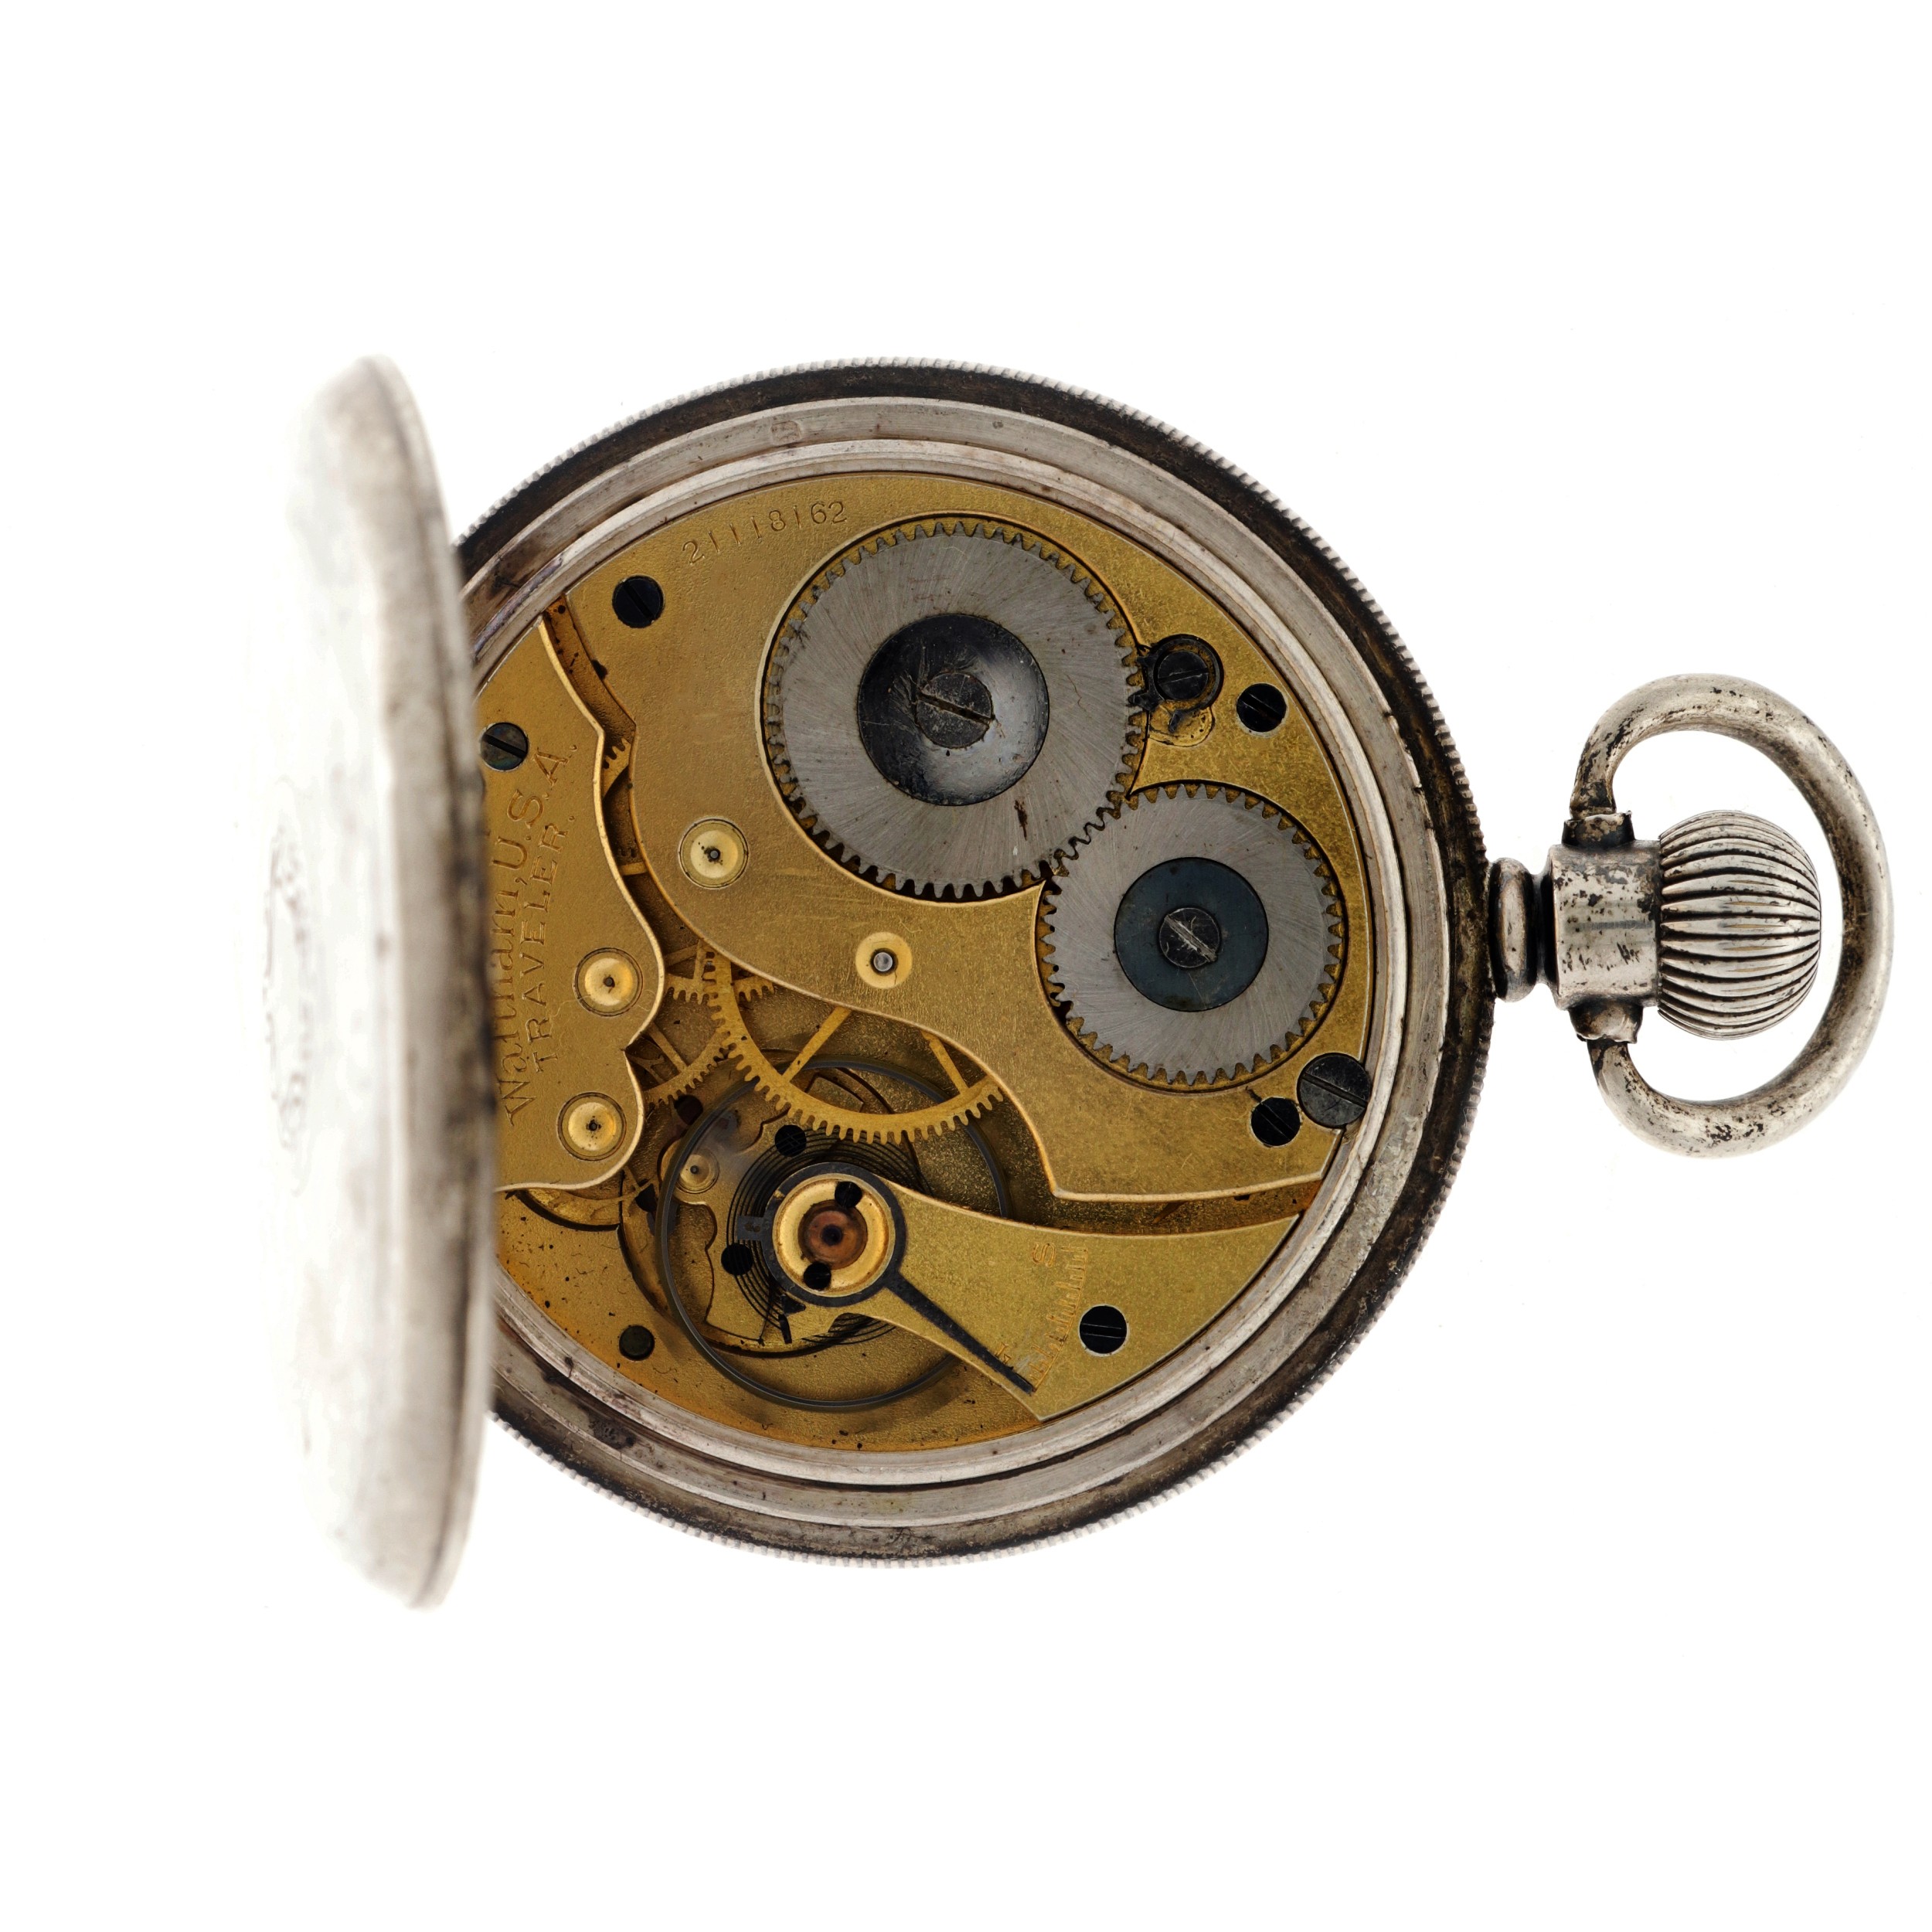 No Reserve - Waltham U.S.A. silver pocketwatch (925/1000) - Men's pocketwatch - approx. 1918. - Image 7 of 7